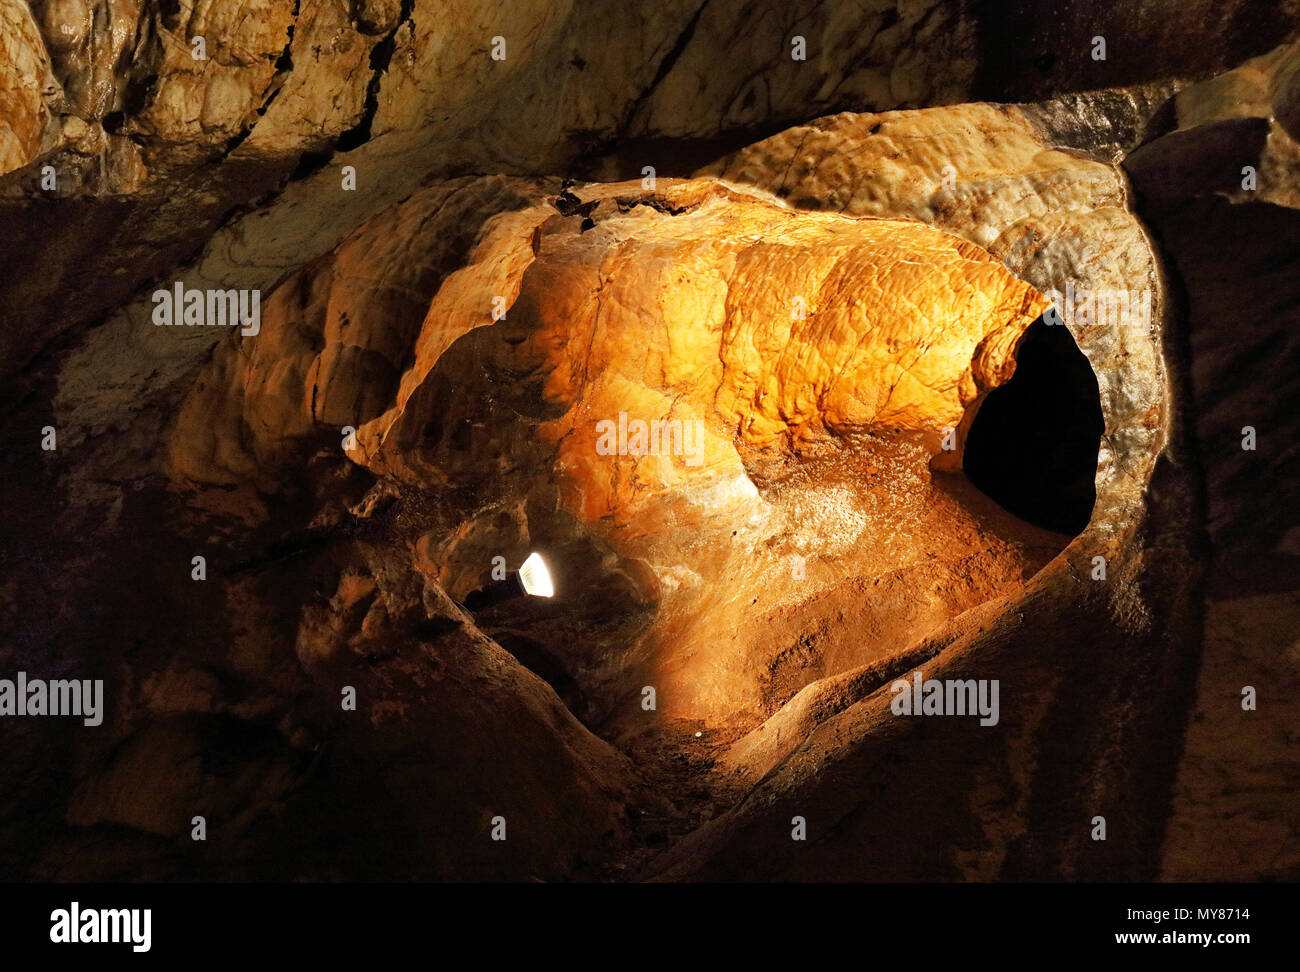 Ochtinska aragonitova jaskyna, Ochtinska aragonit cave, Slovakia Stock Photo